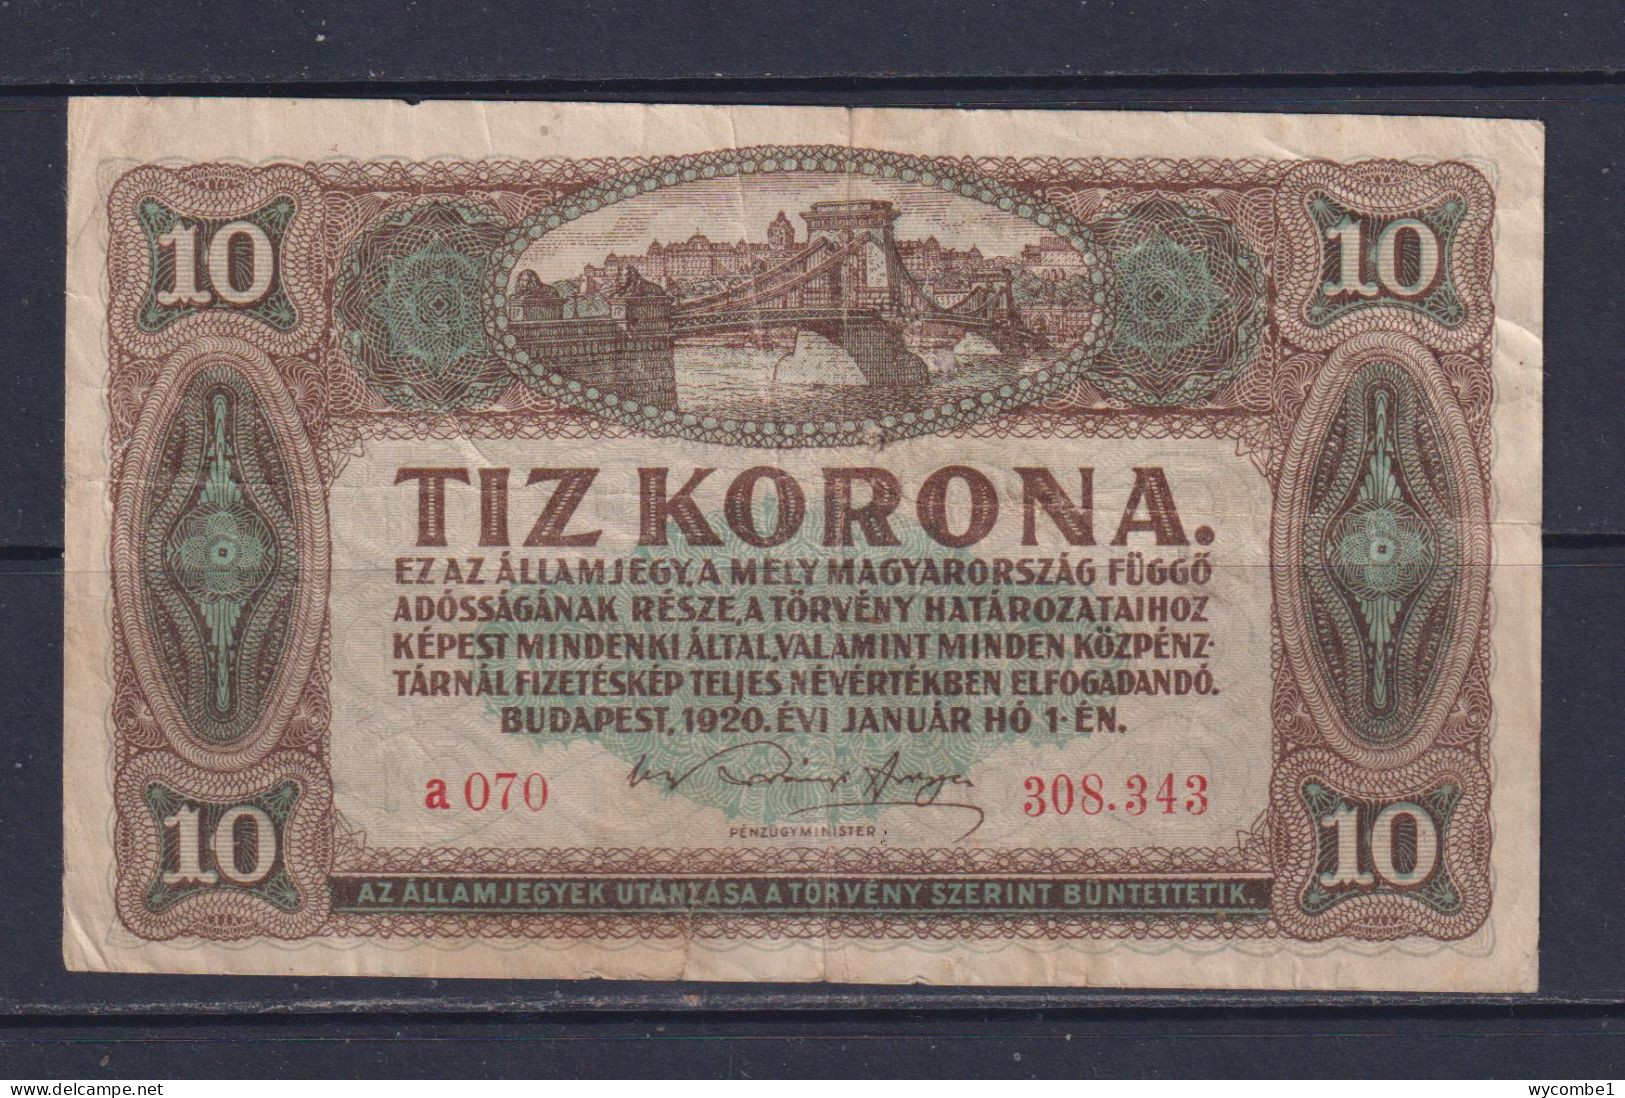 HUNGARY - 1920 10 Korona Circulated Banknote - Hungary